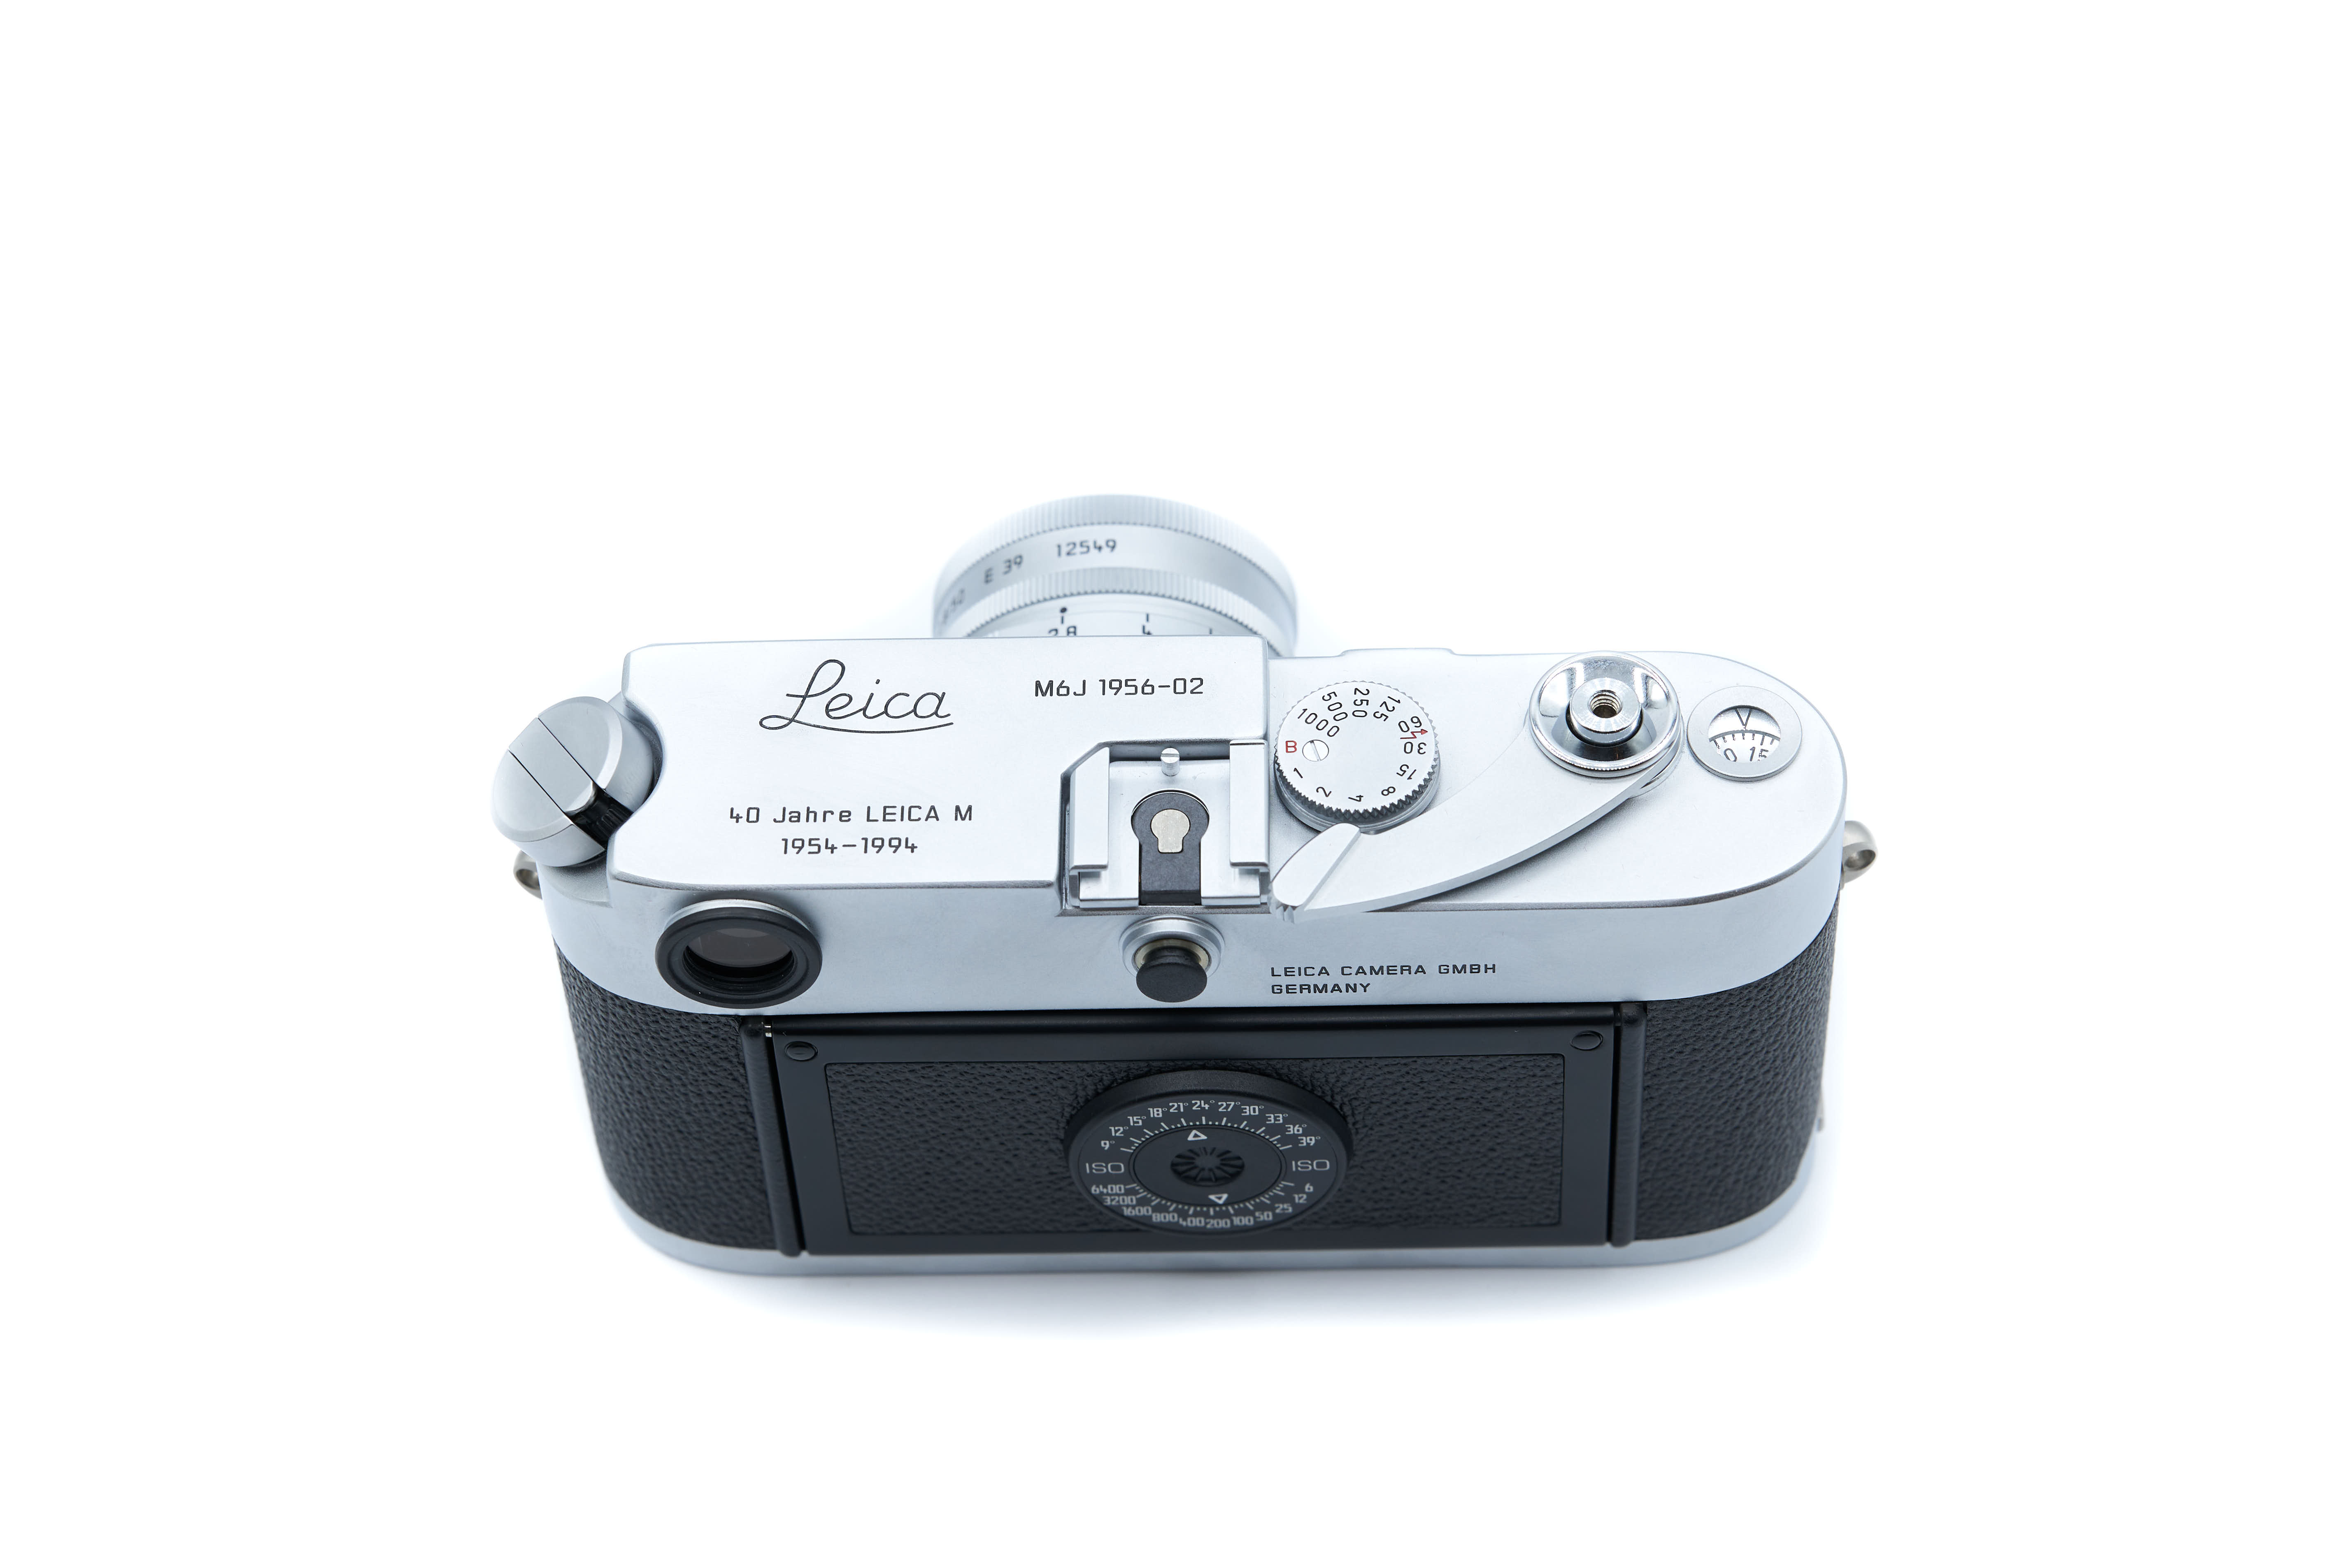 Leica M6J "Jubilee" Kit with Elmar-M 50mm F2.8